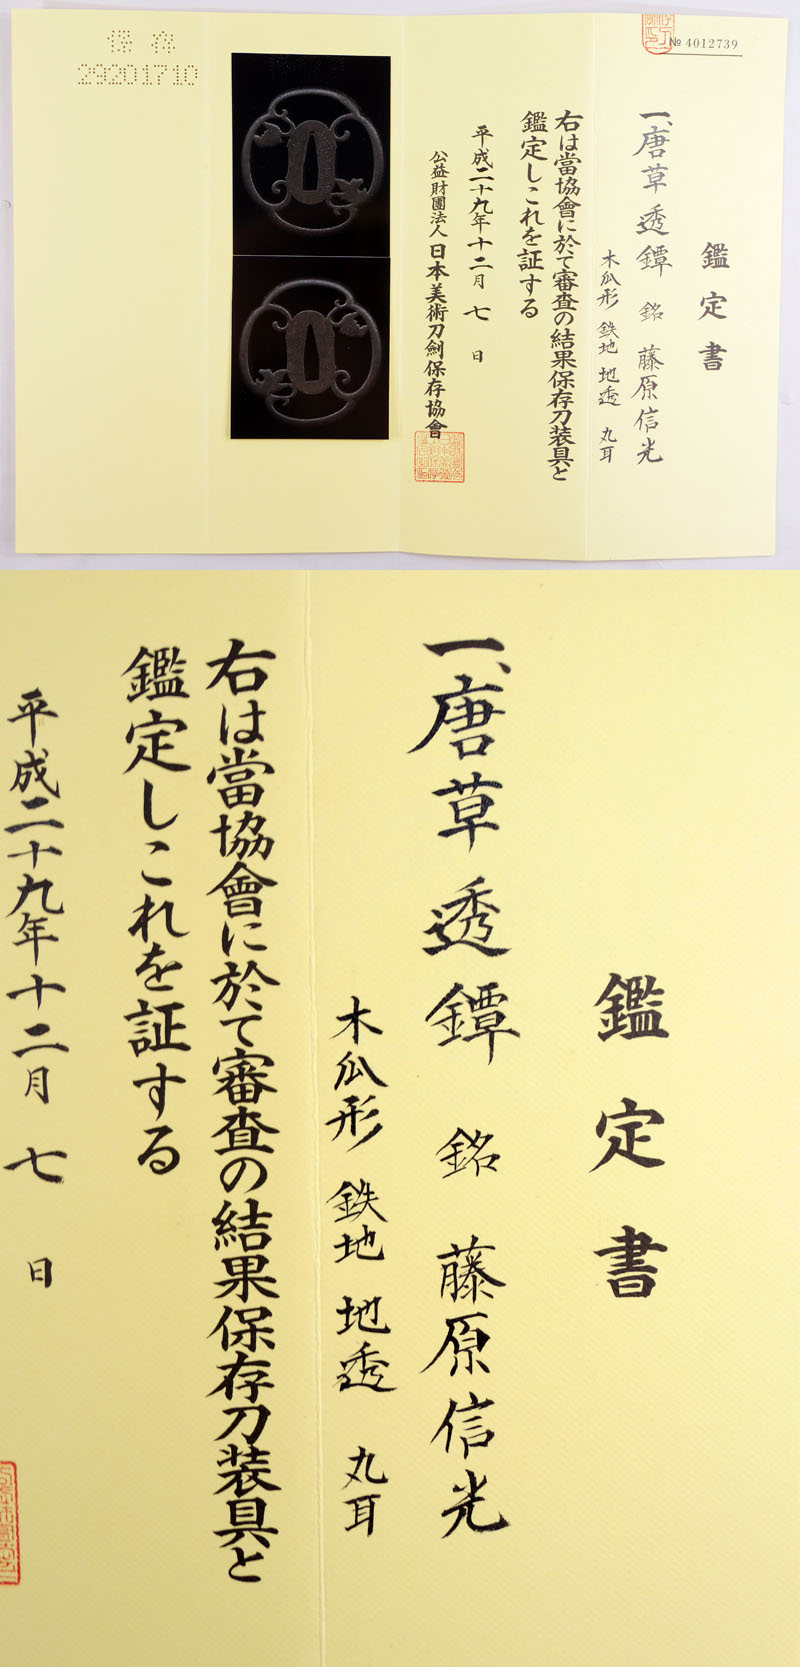 唐草透鍔　藤原信光 Picture of Certificate